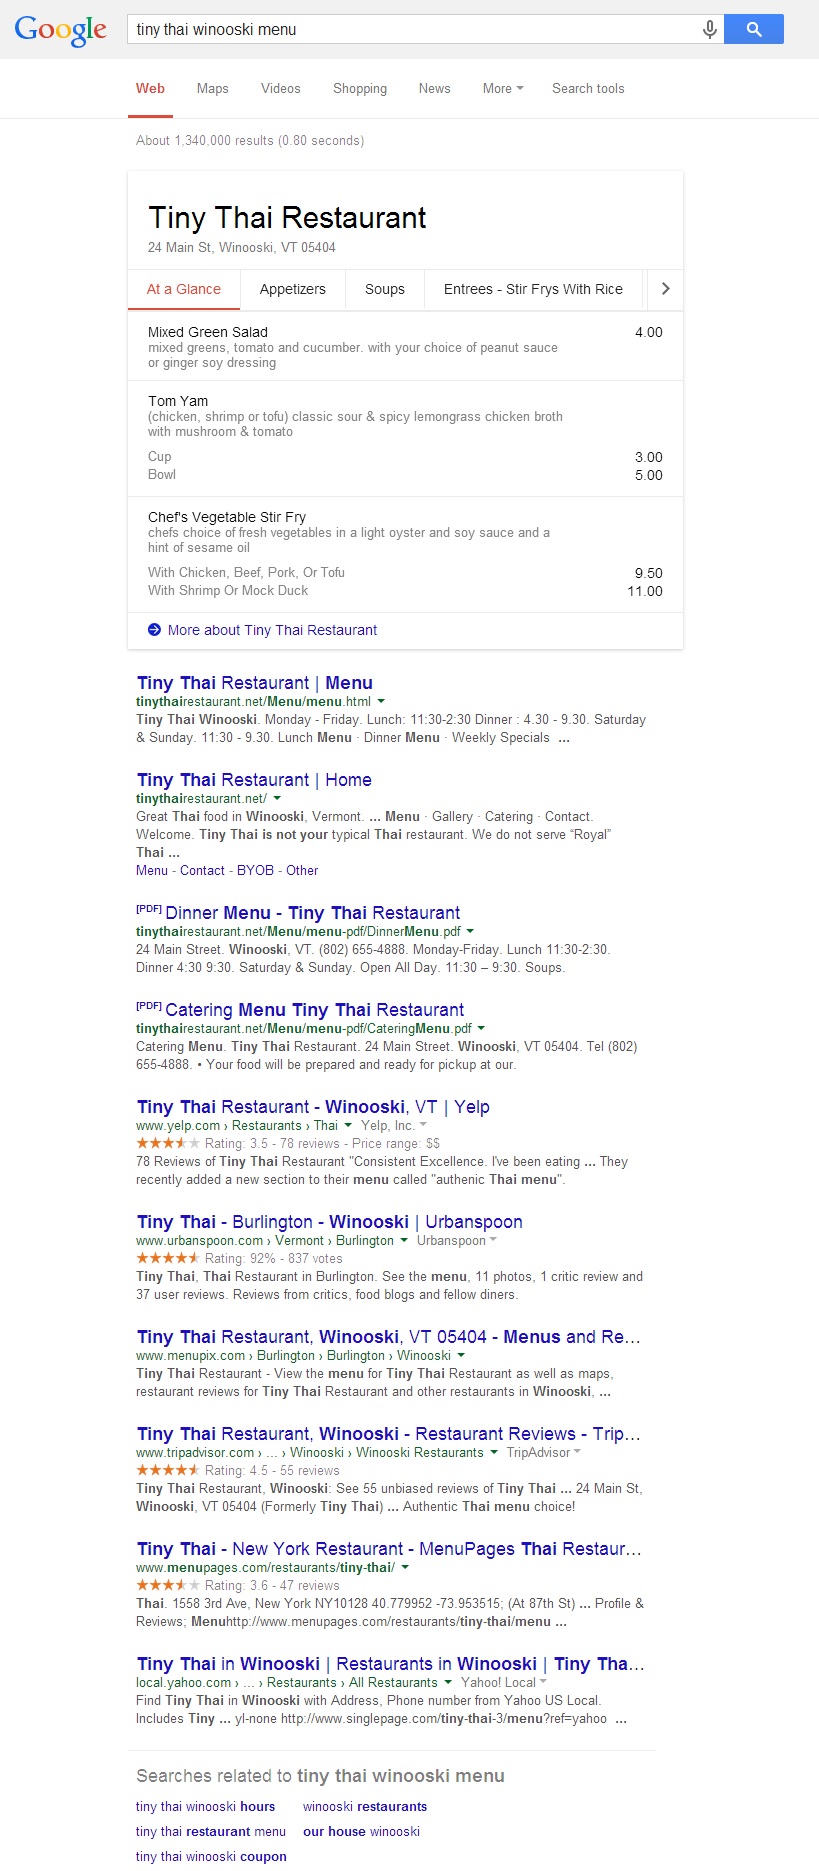 Google Menu Search Results